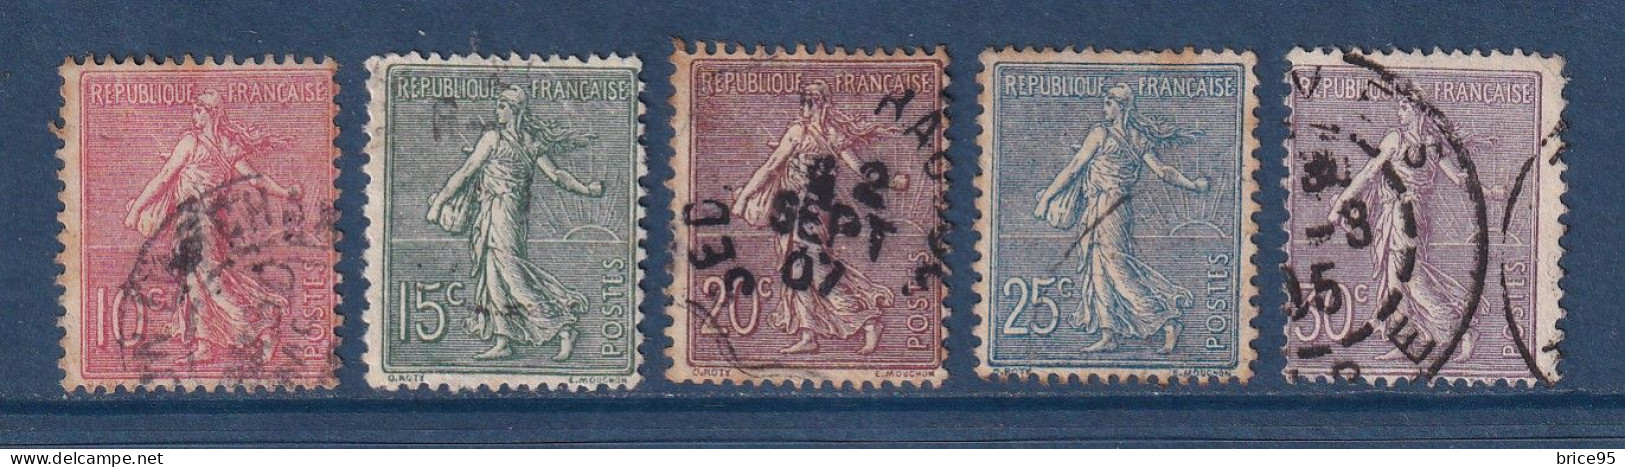 France - YT N° 129 à 133 - Oblitéré - 1903 - Usati